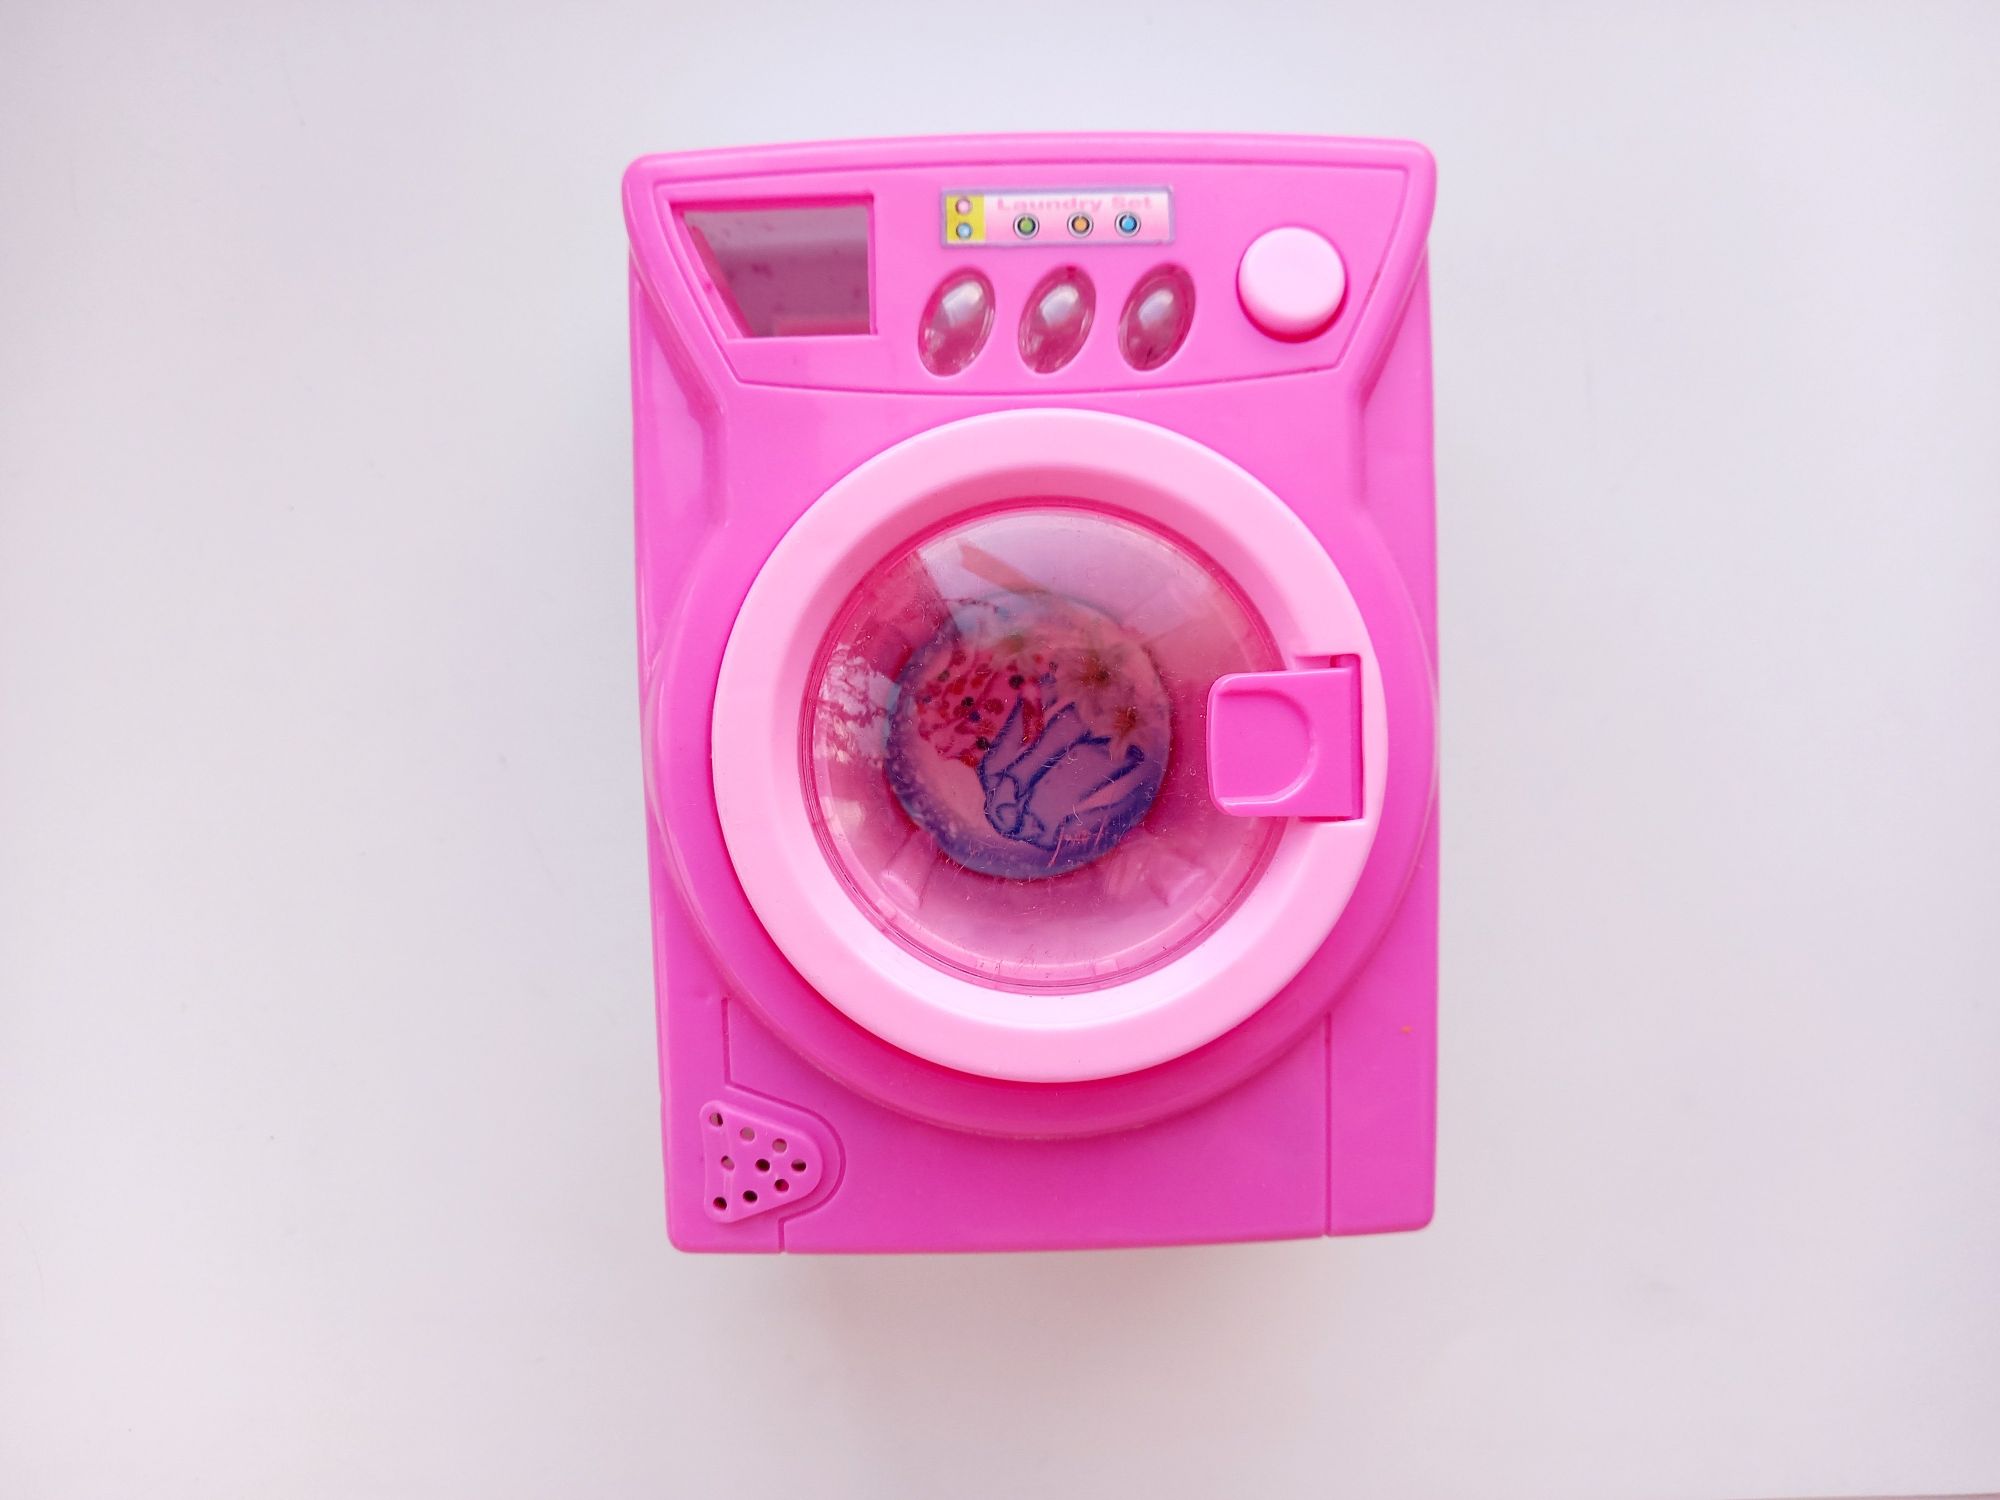 Іграшкова пральна машинка для ляльок